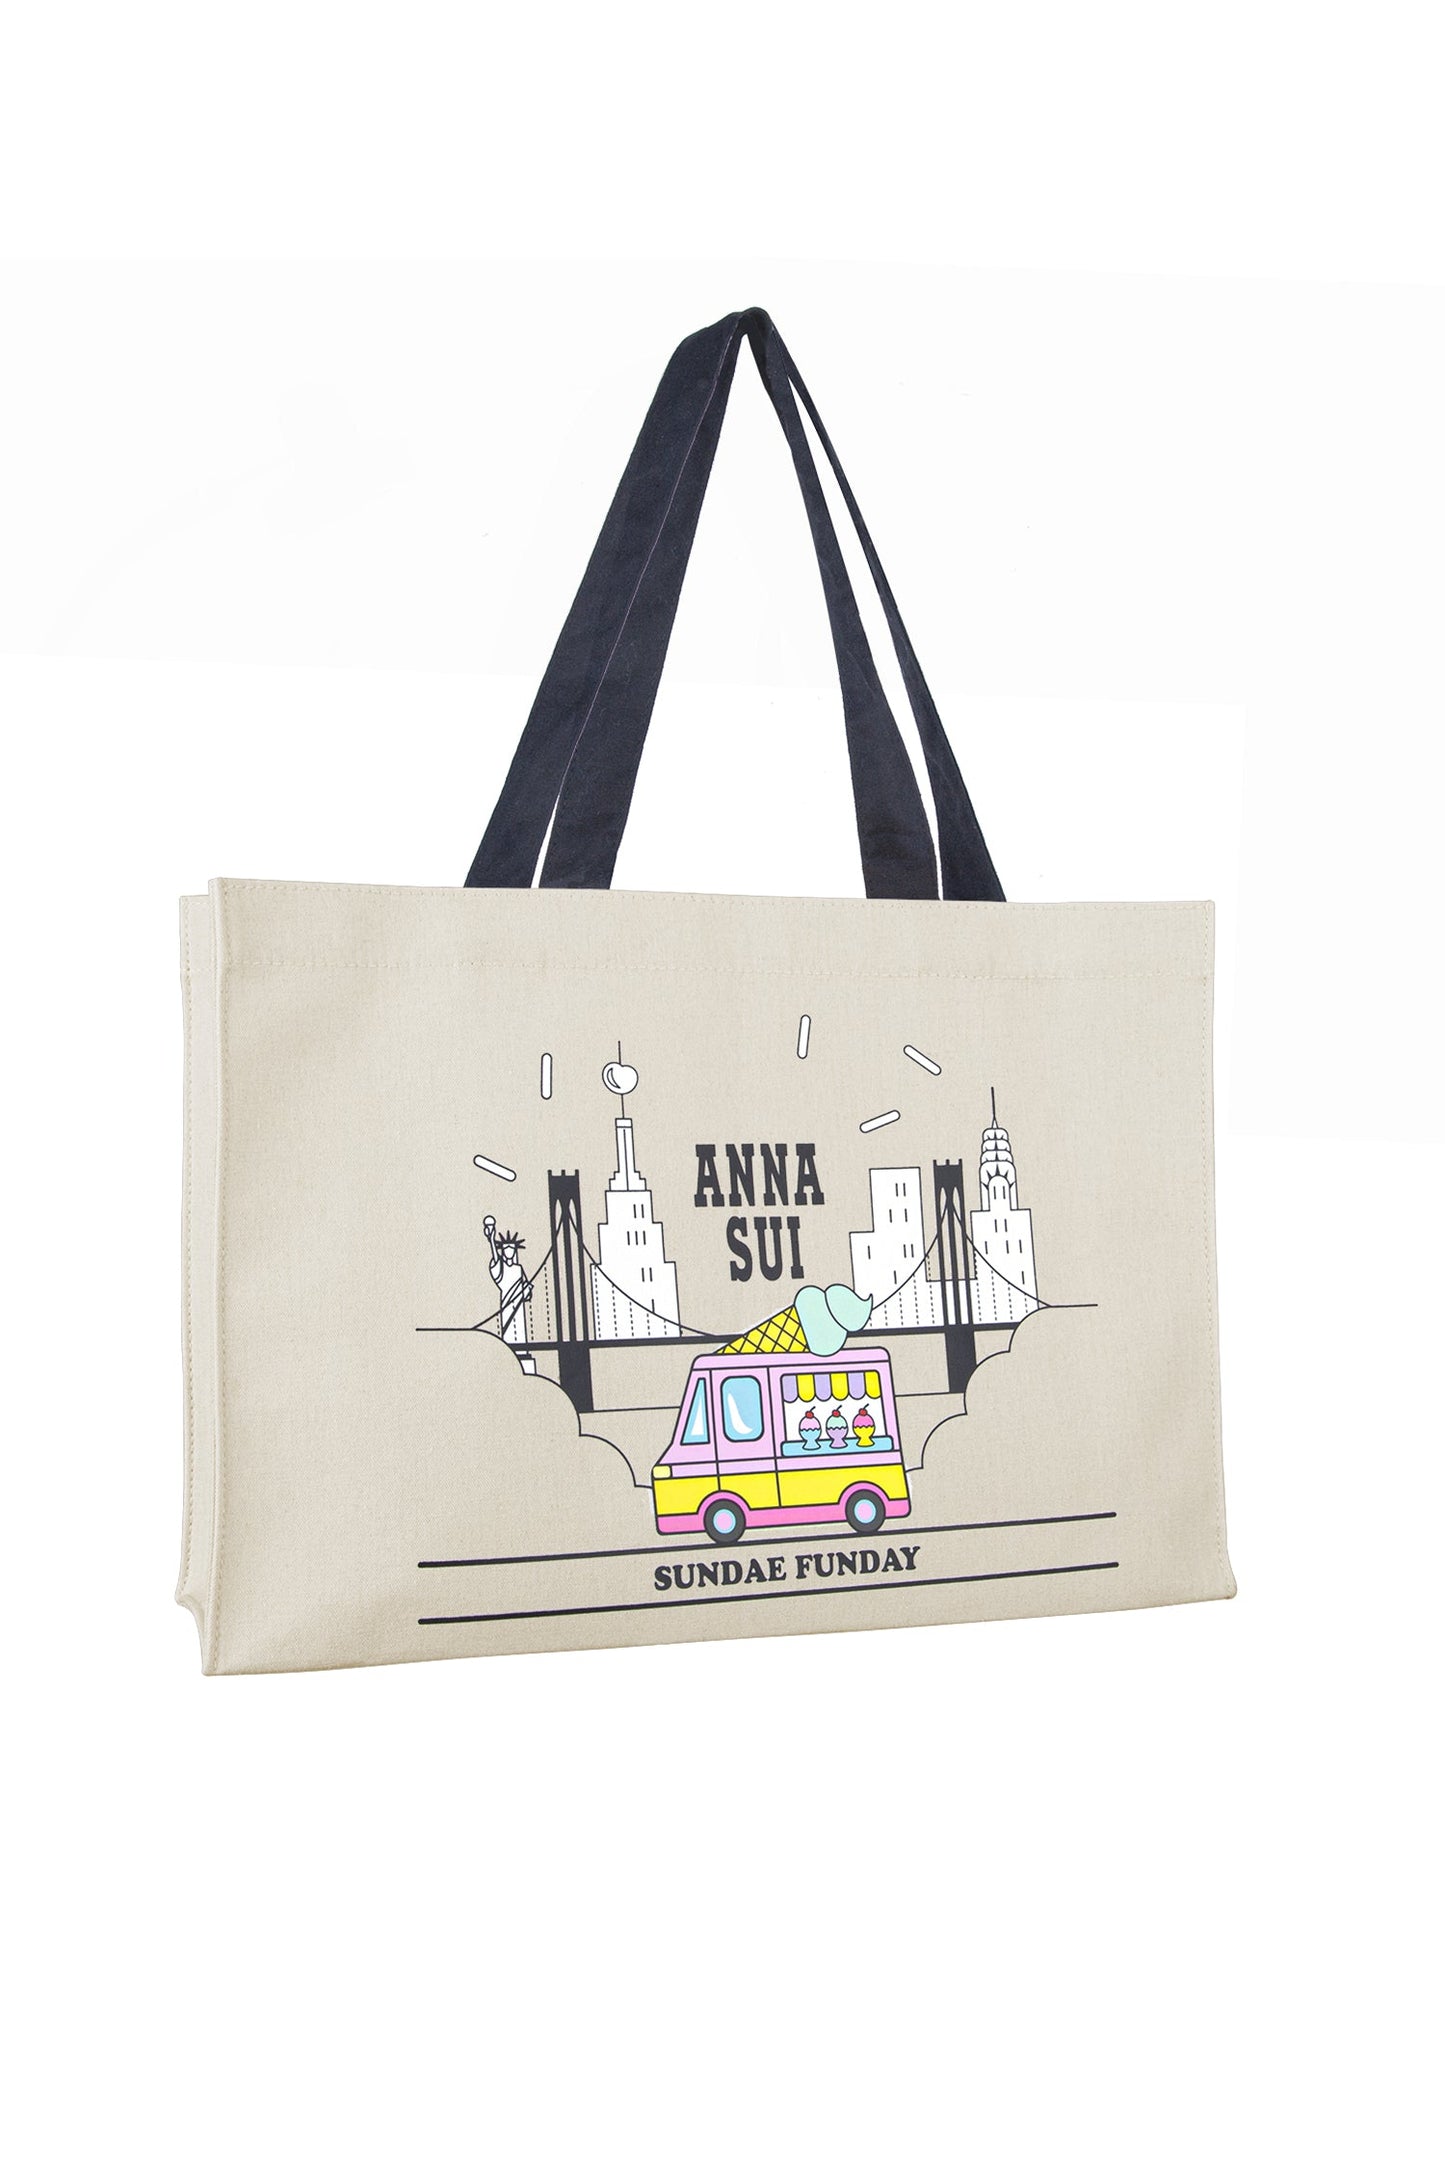 FREE Sundae Funday tote bag, stylized New York bridge, building, ice-cream van, Anna Sui label